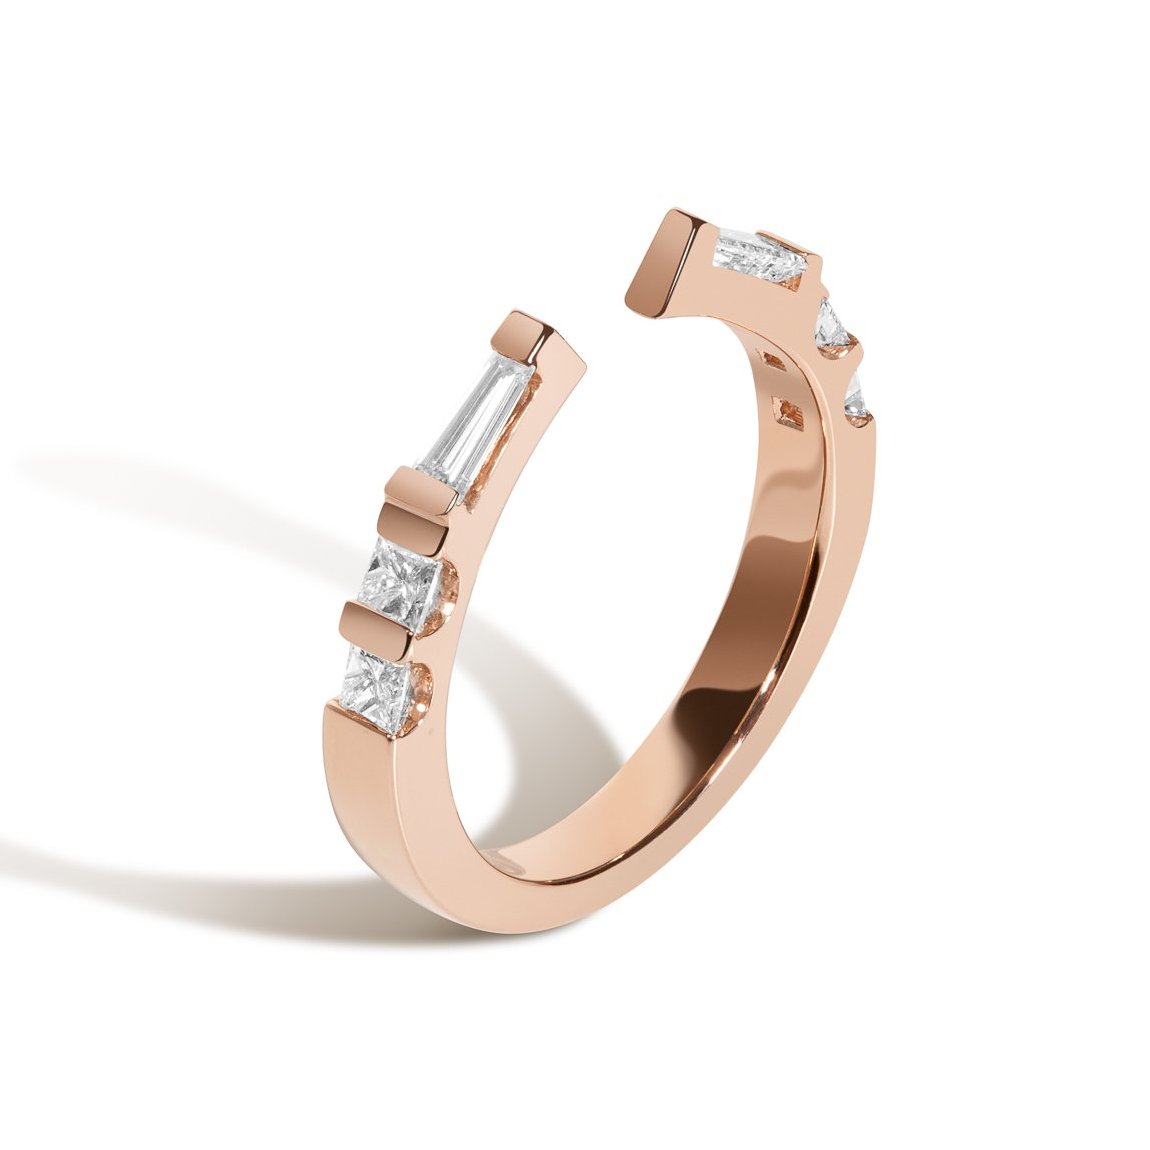 Shahla Karimi Jewelry Landmark Collection Chrysler Ring No. 2 14K Rose Gold with White Diamonds